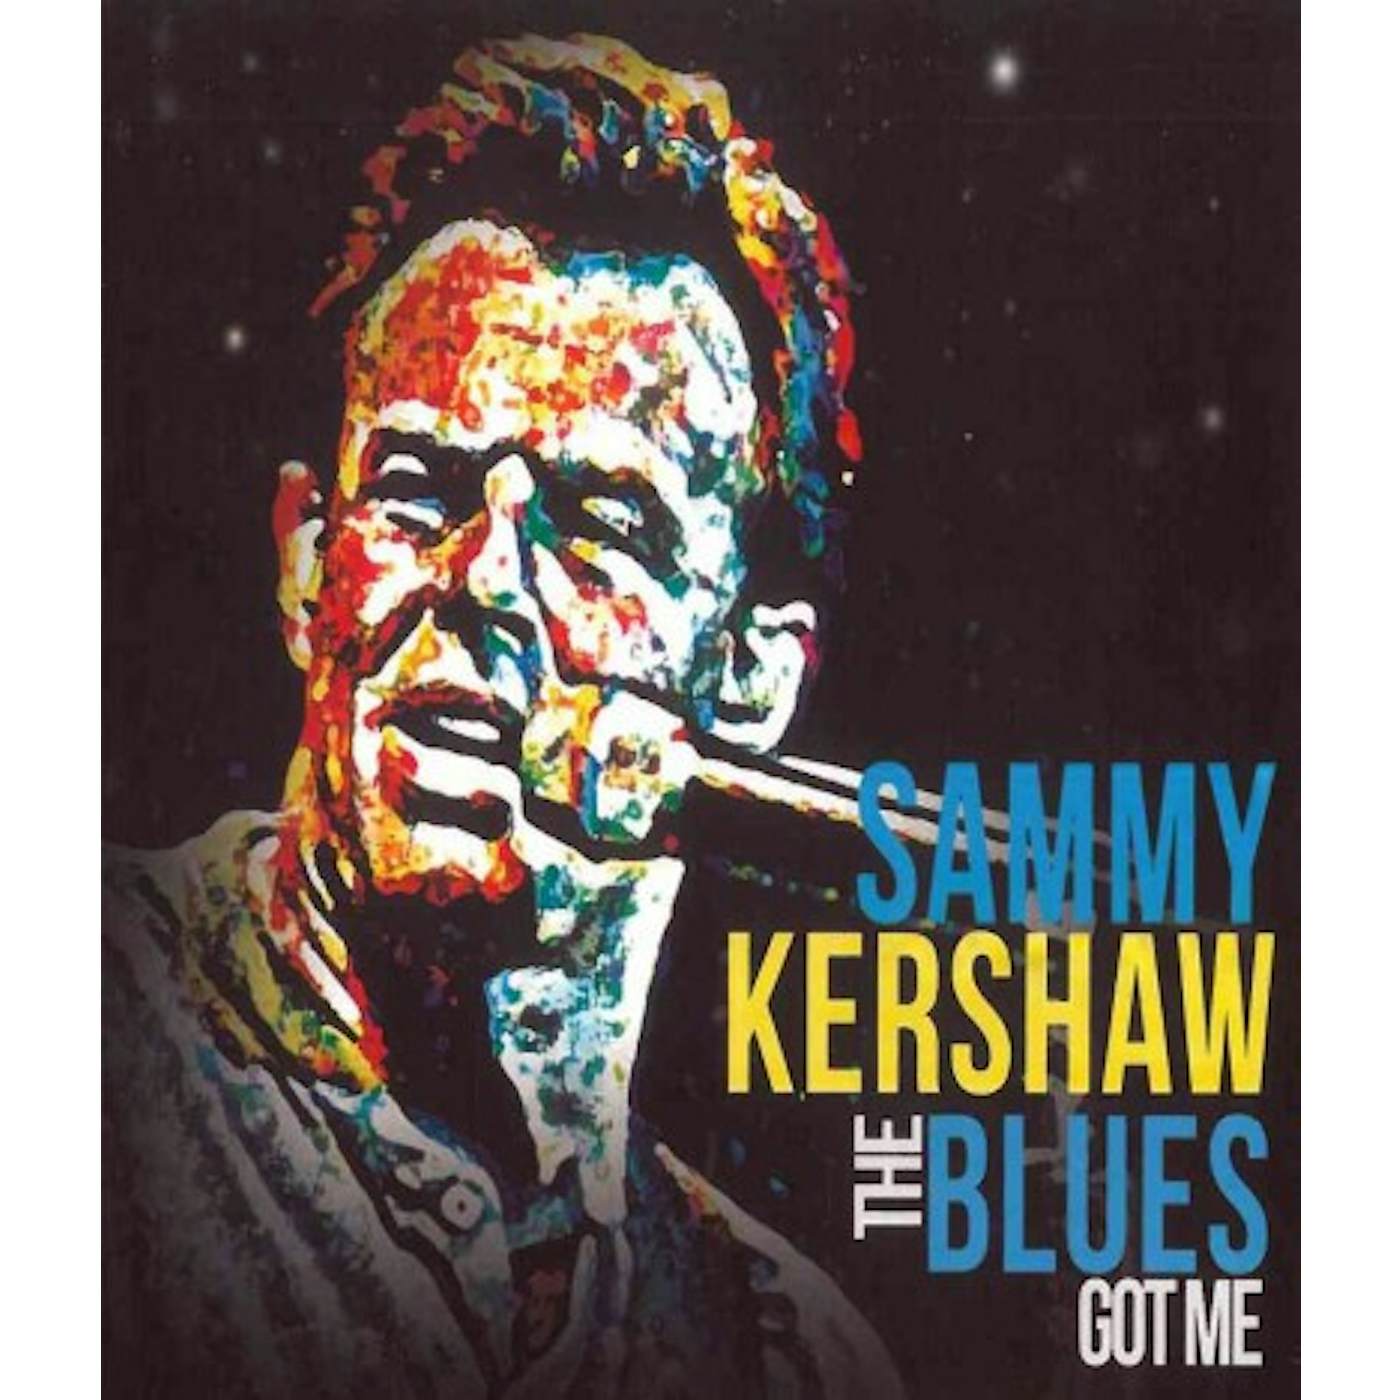 Sammy Kershaw BLUES GOT ME CD